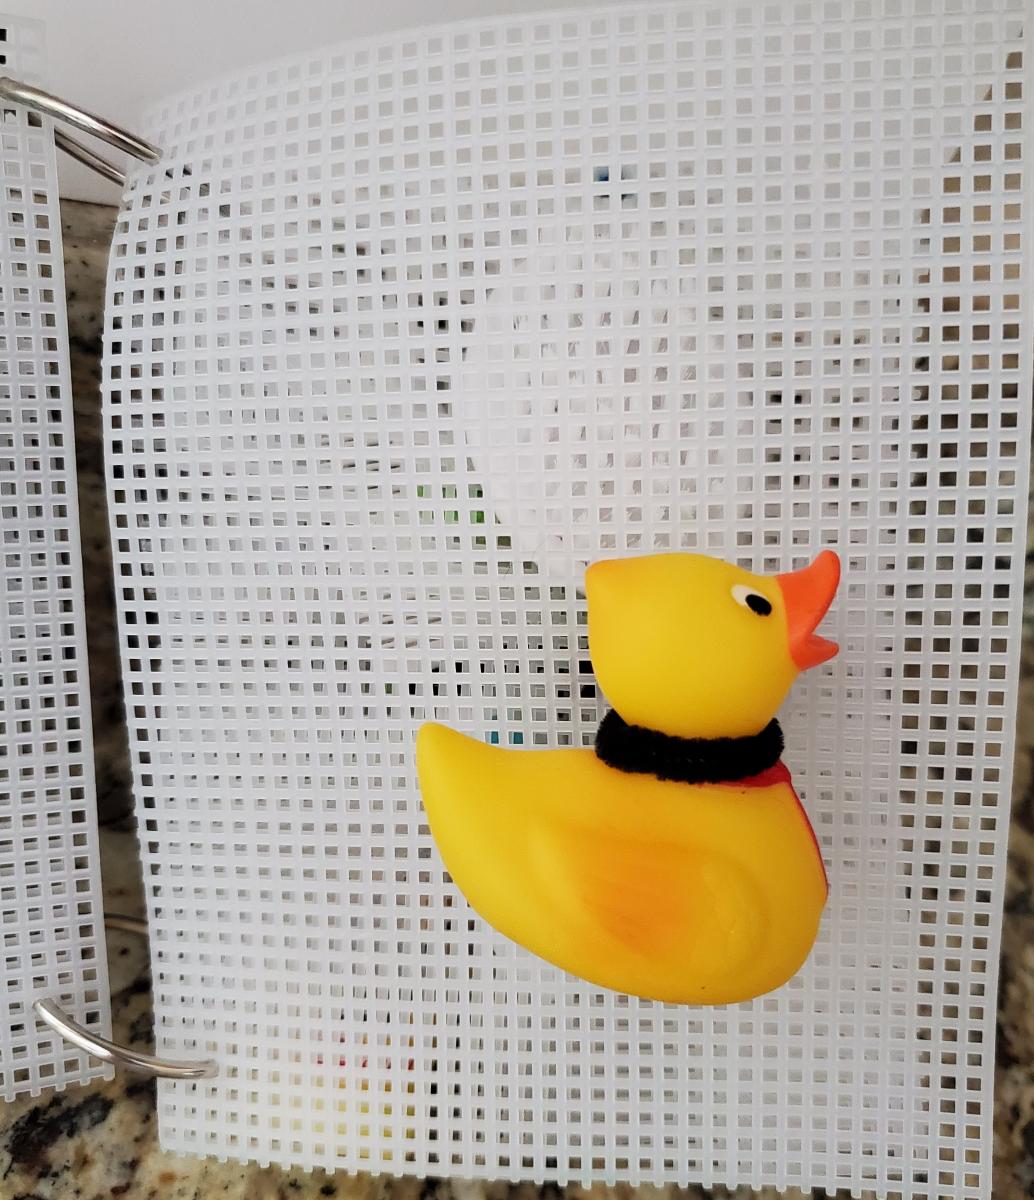 Rubber duck in bath book